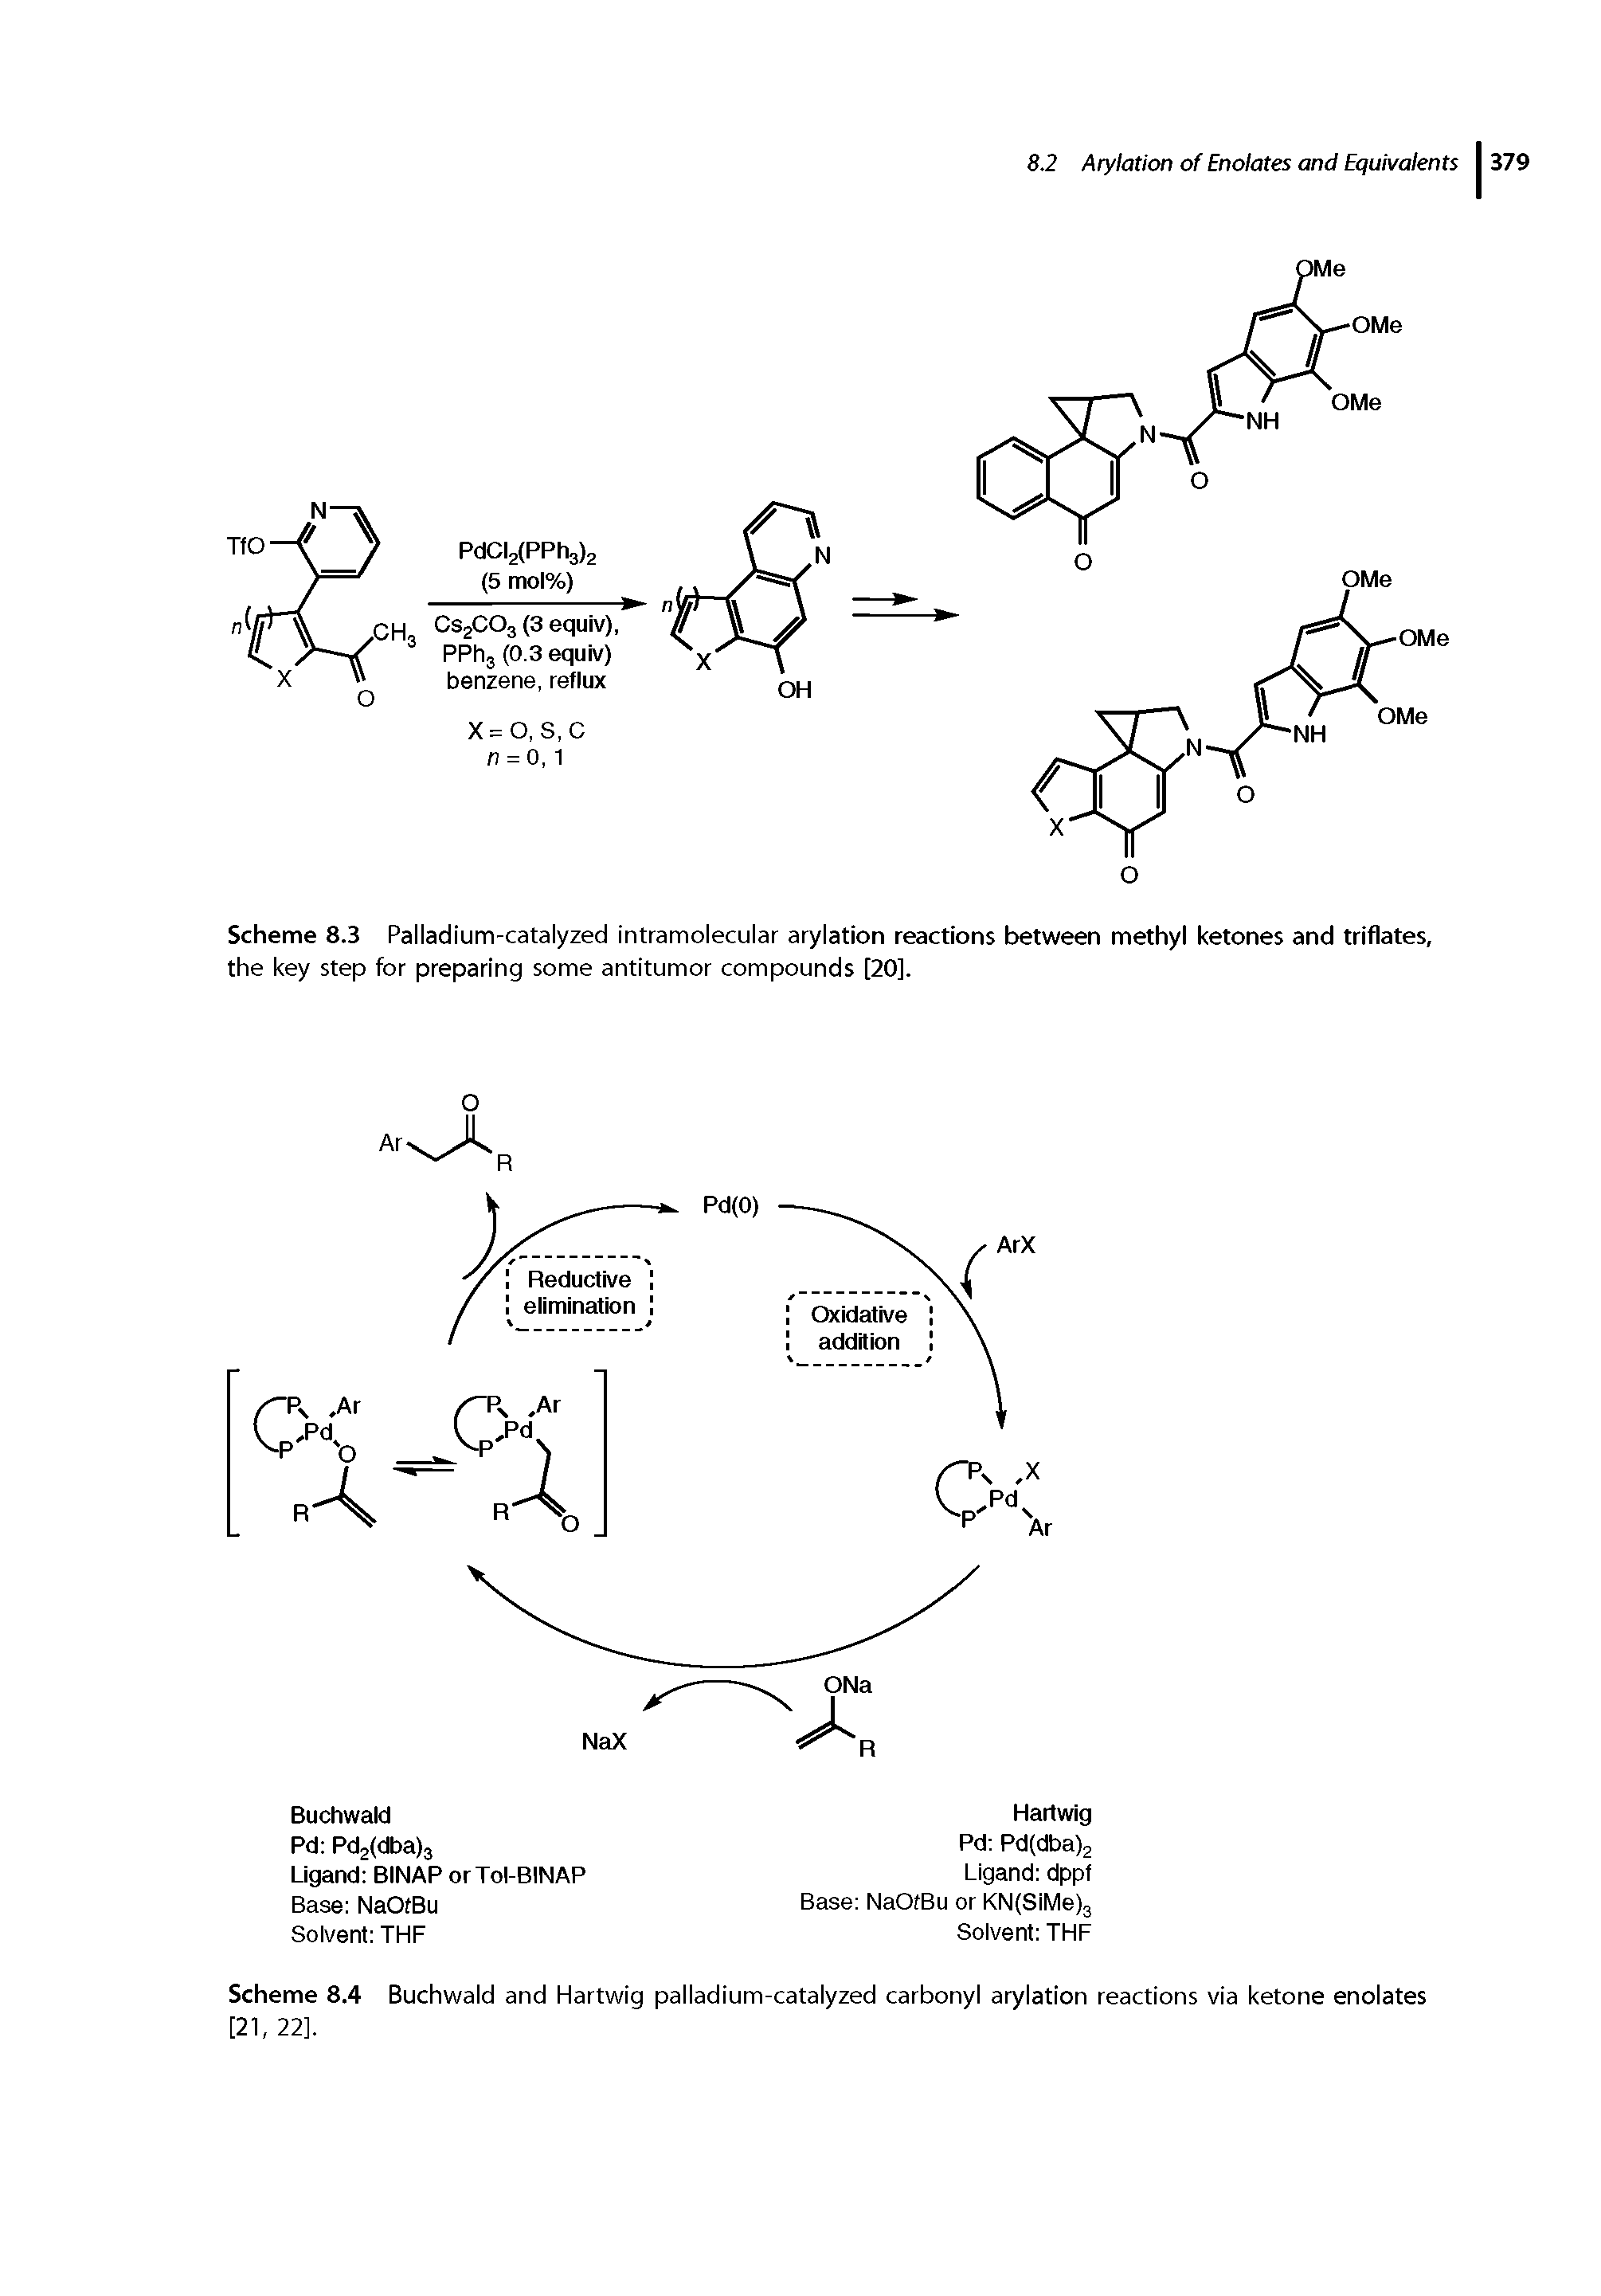 Scheme 8.4 Buchwald and Hartwig palladium-catalyzed carbonyl arylation reactions via ketone enolates...